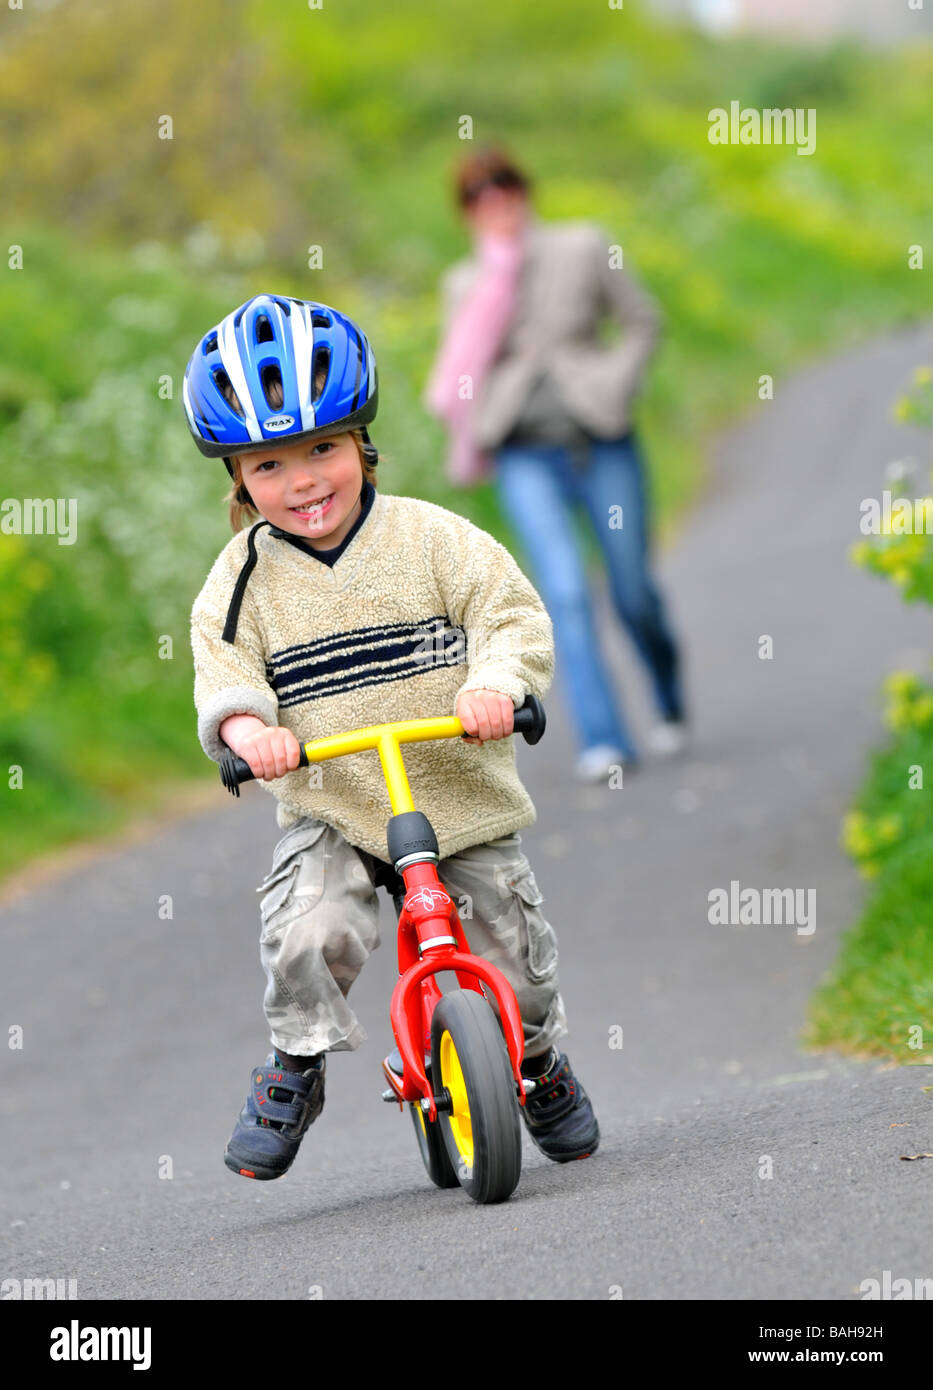 Boy learning to ride a balance bike Stock Photo